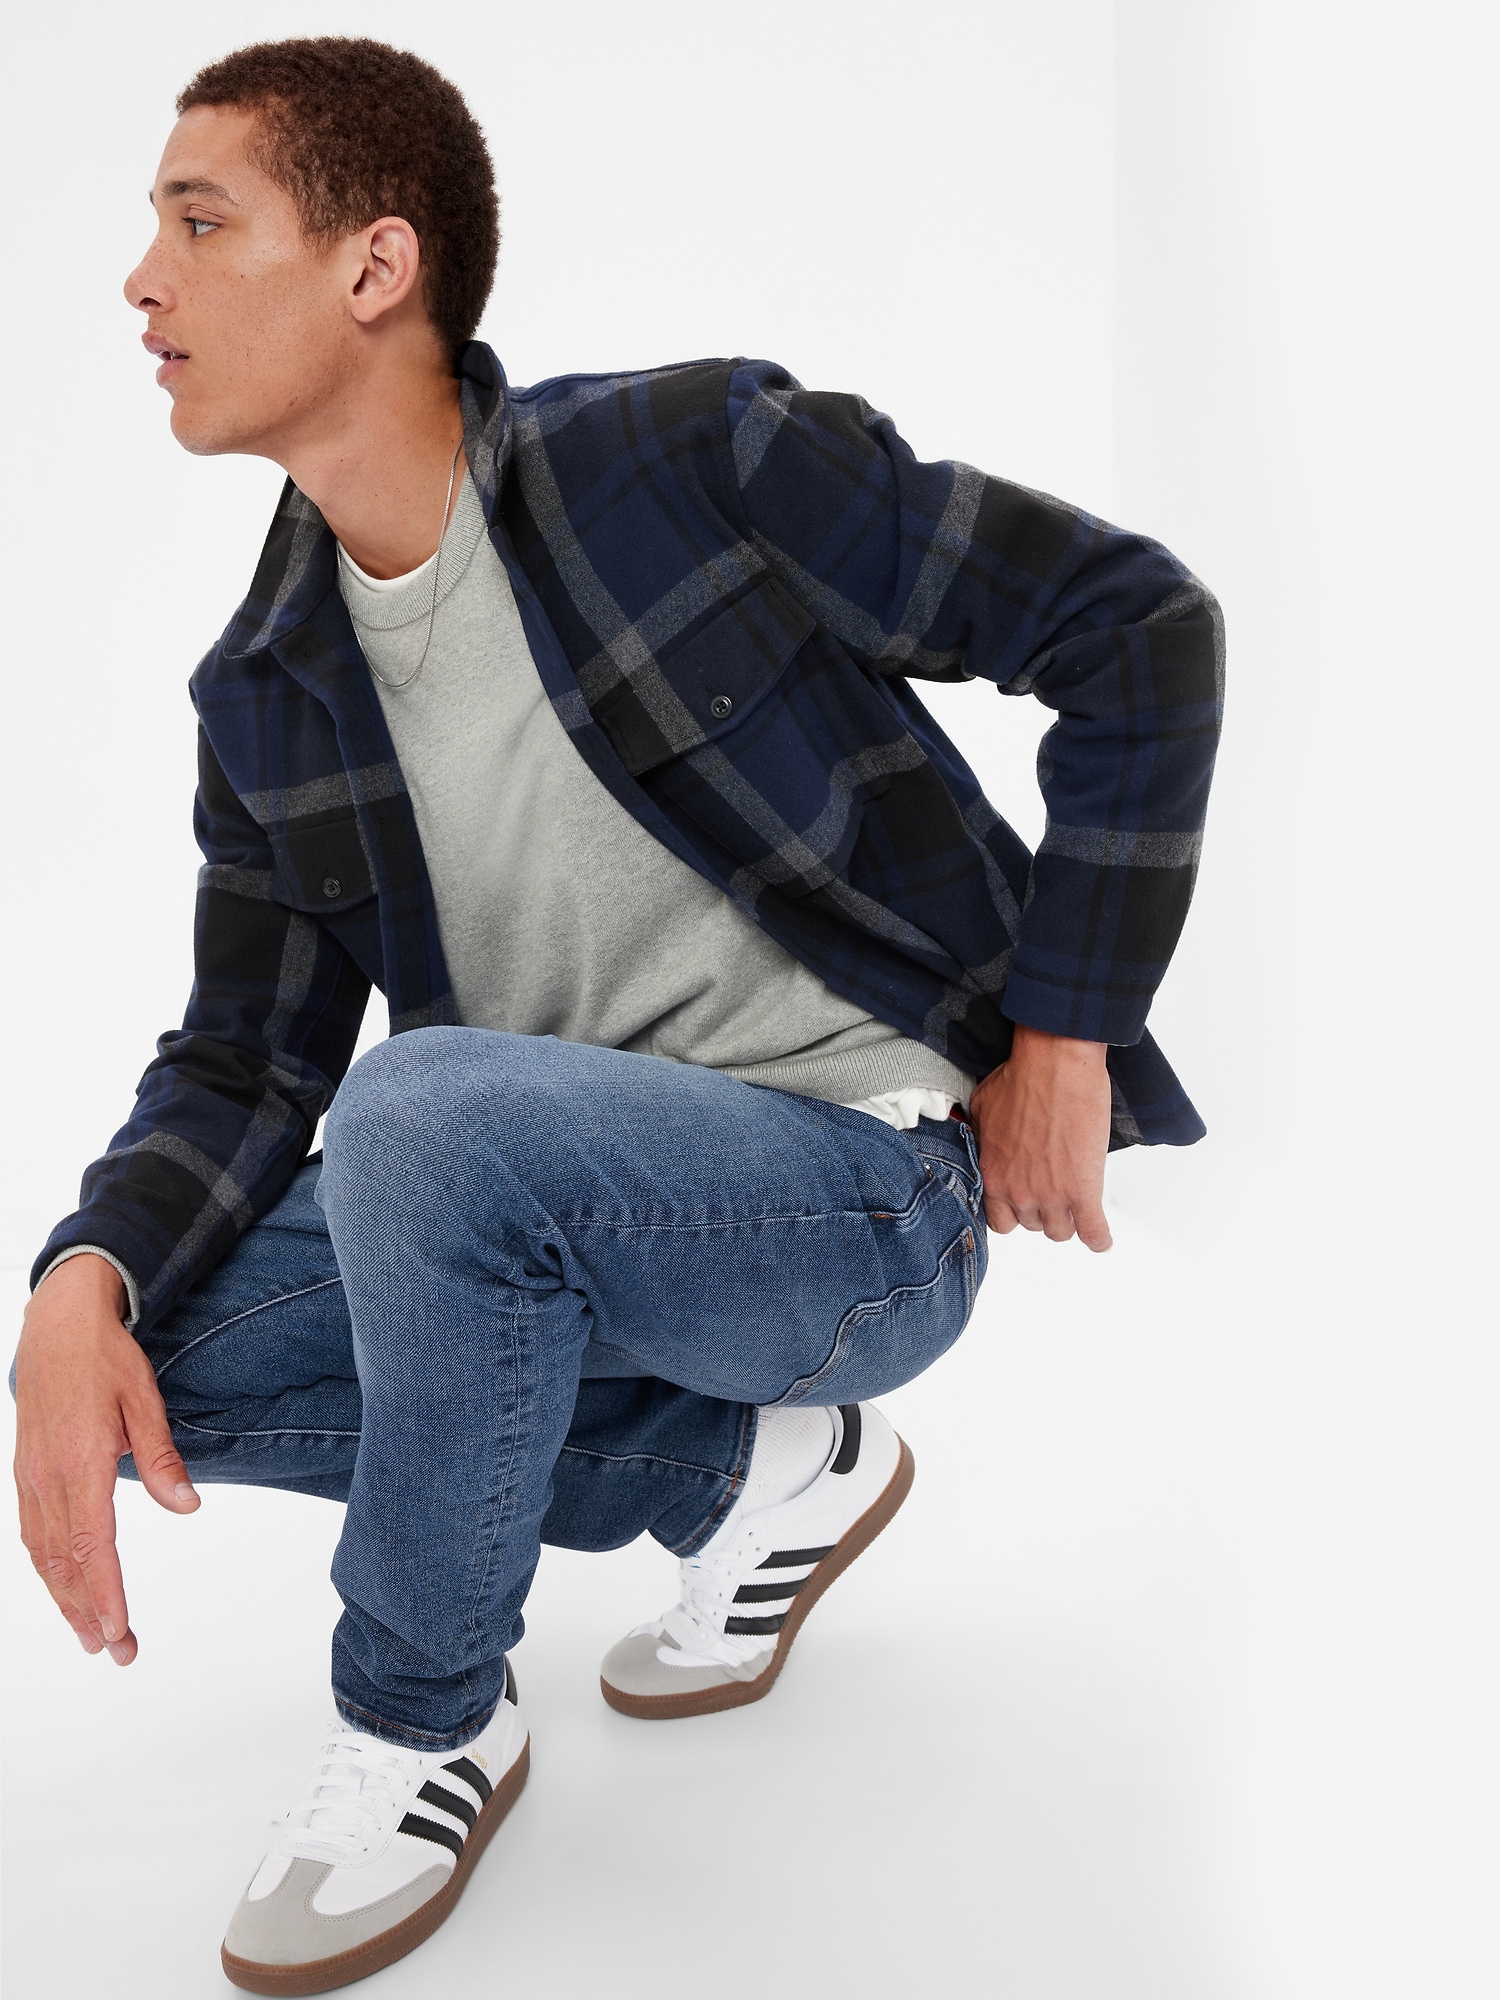 Shop Men DKWASINDIG Skinny GapFlex Soft Wear Max Jeans with Washwell -  36W/32L - 174 AED in KSA